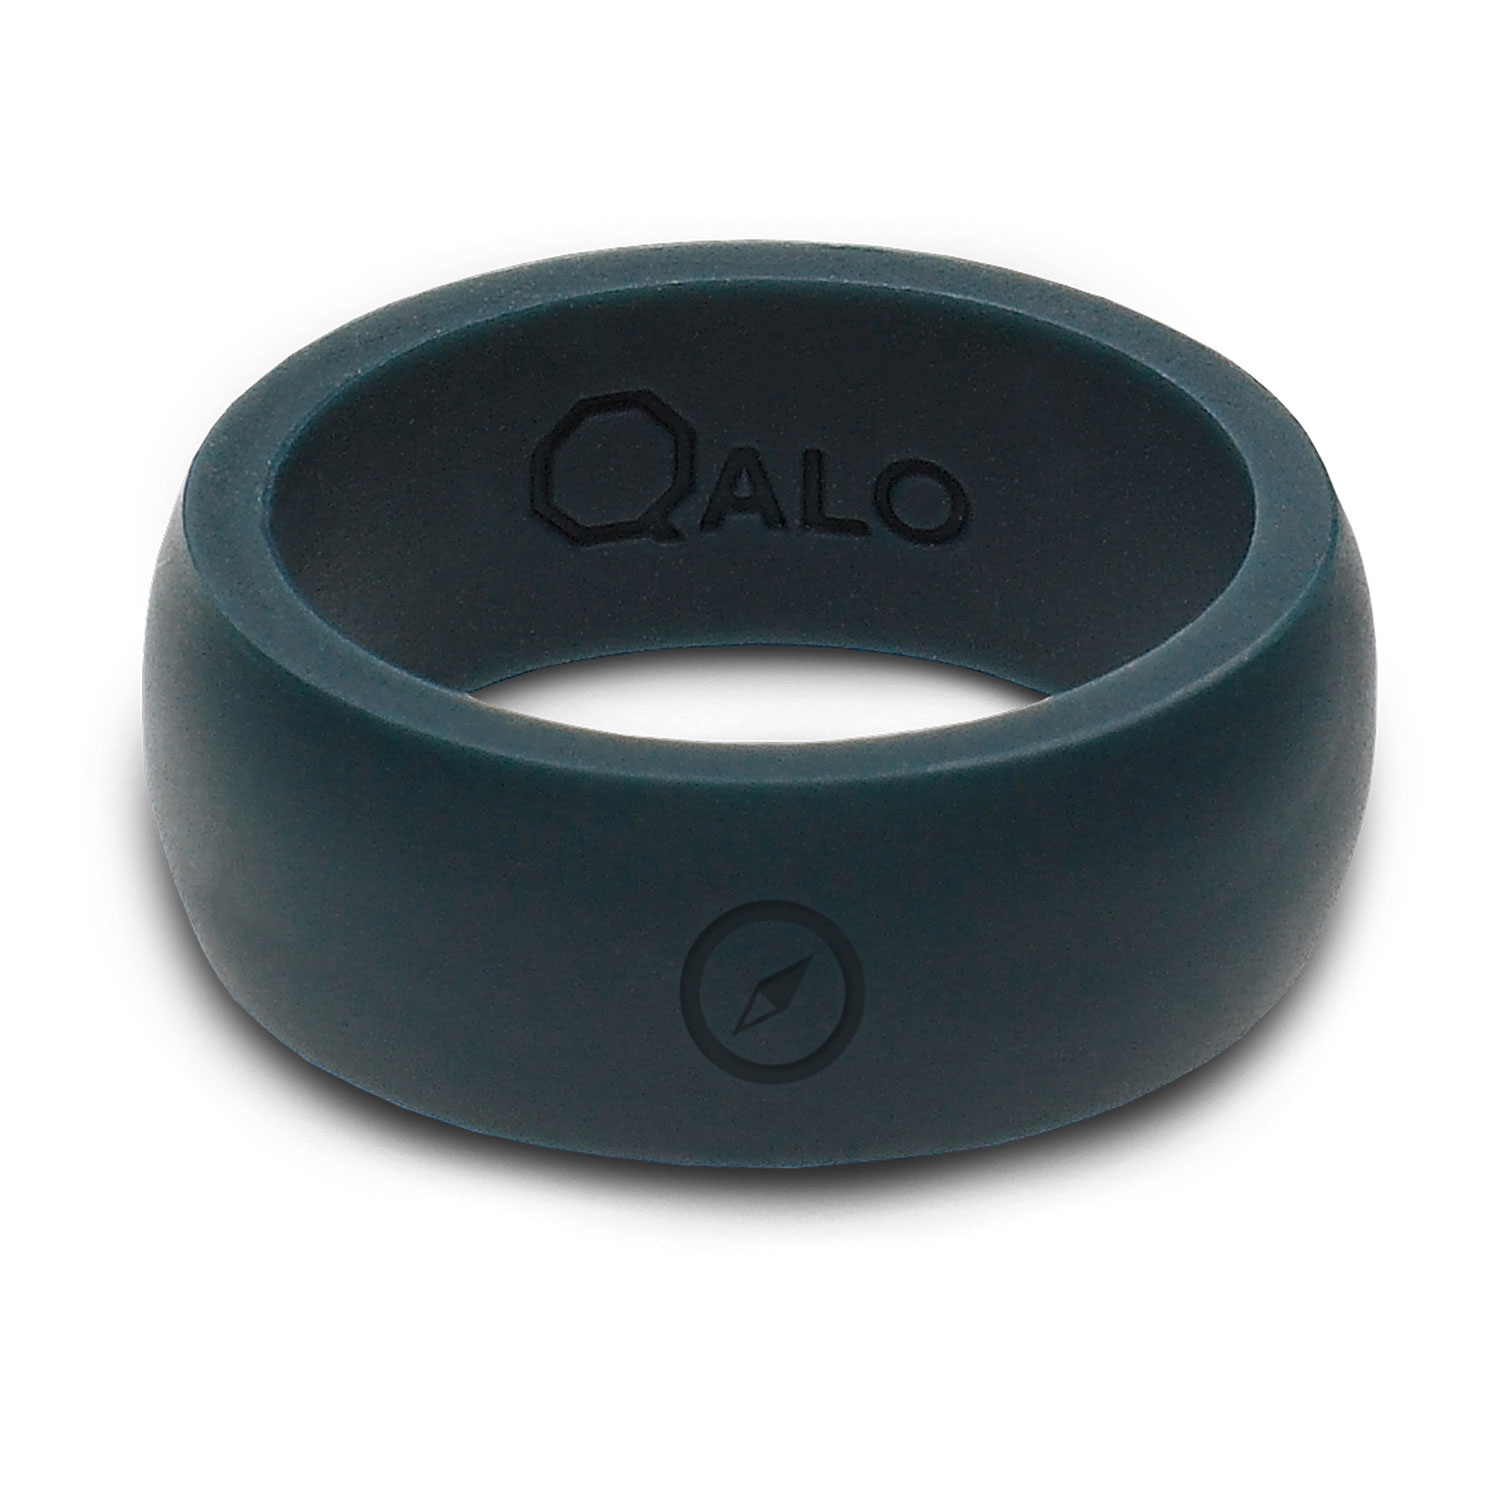 Qalo Men's Classic Outdoor Ring.